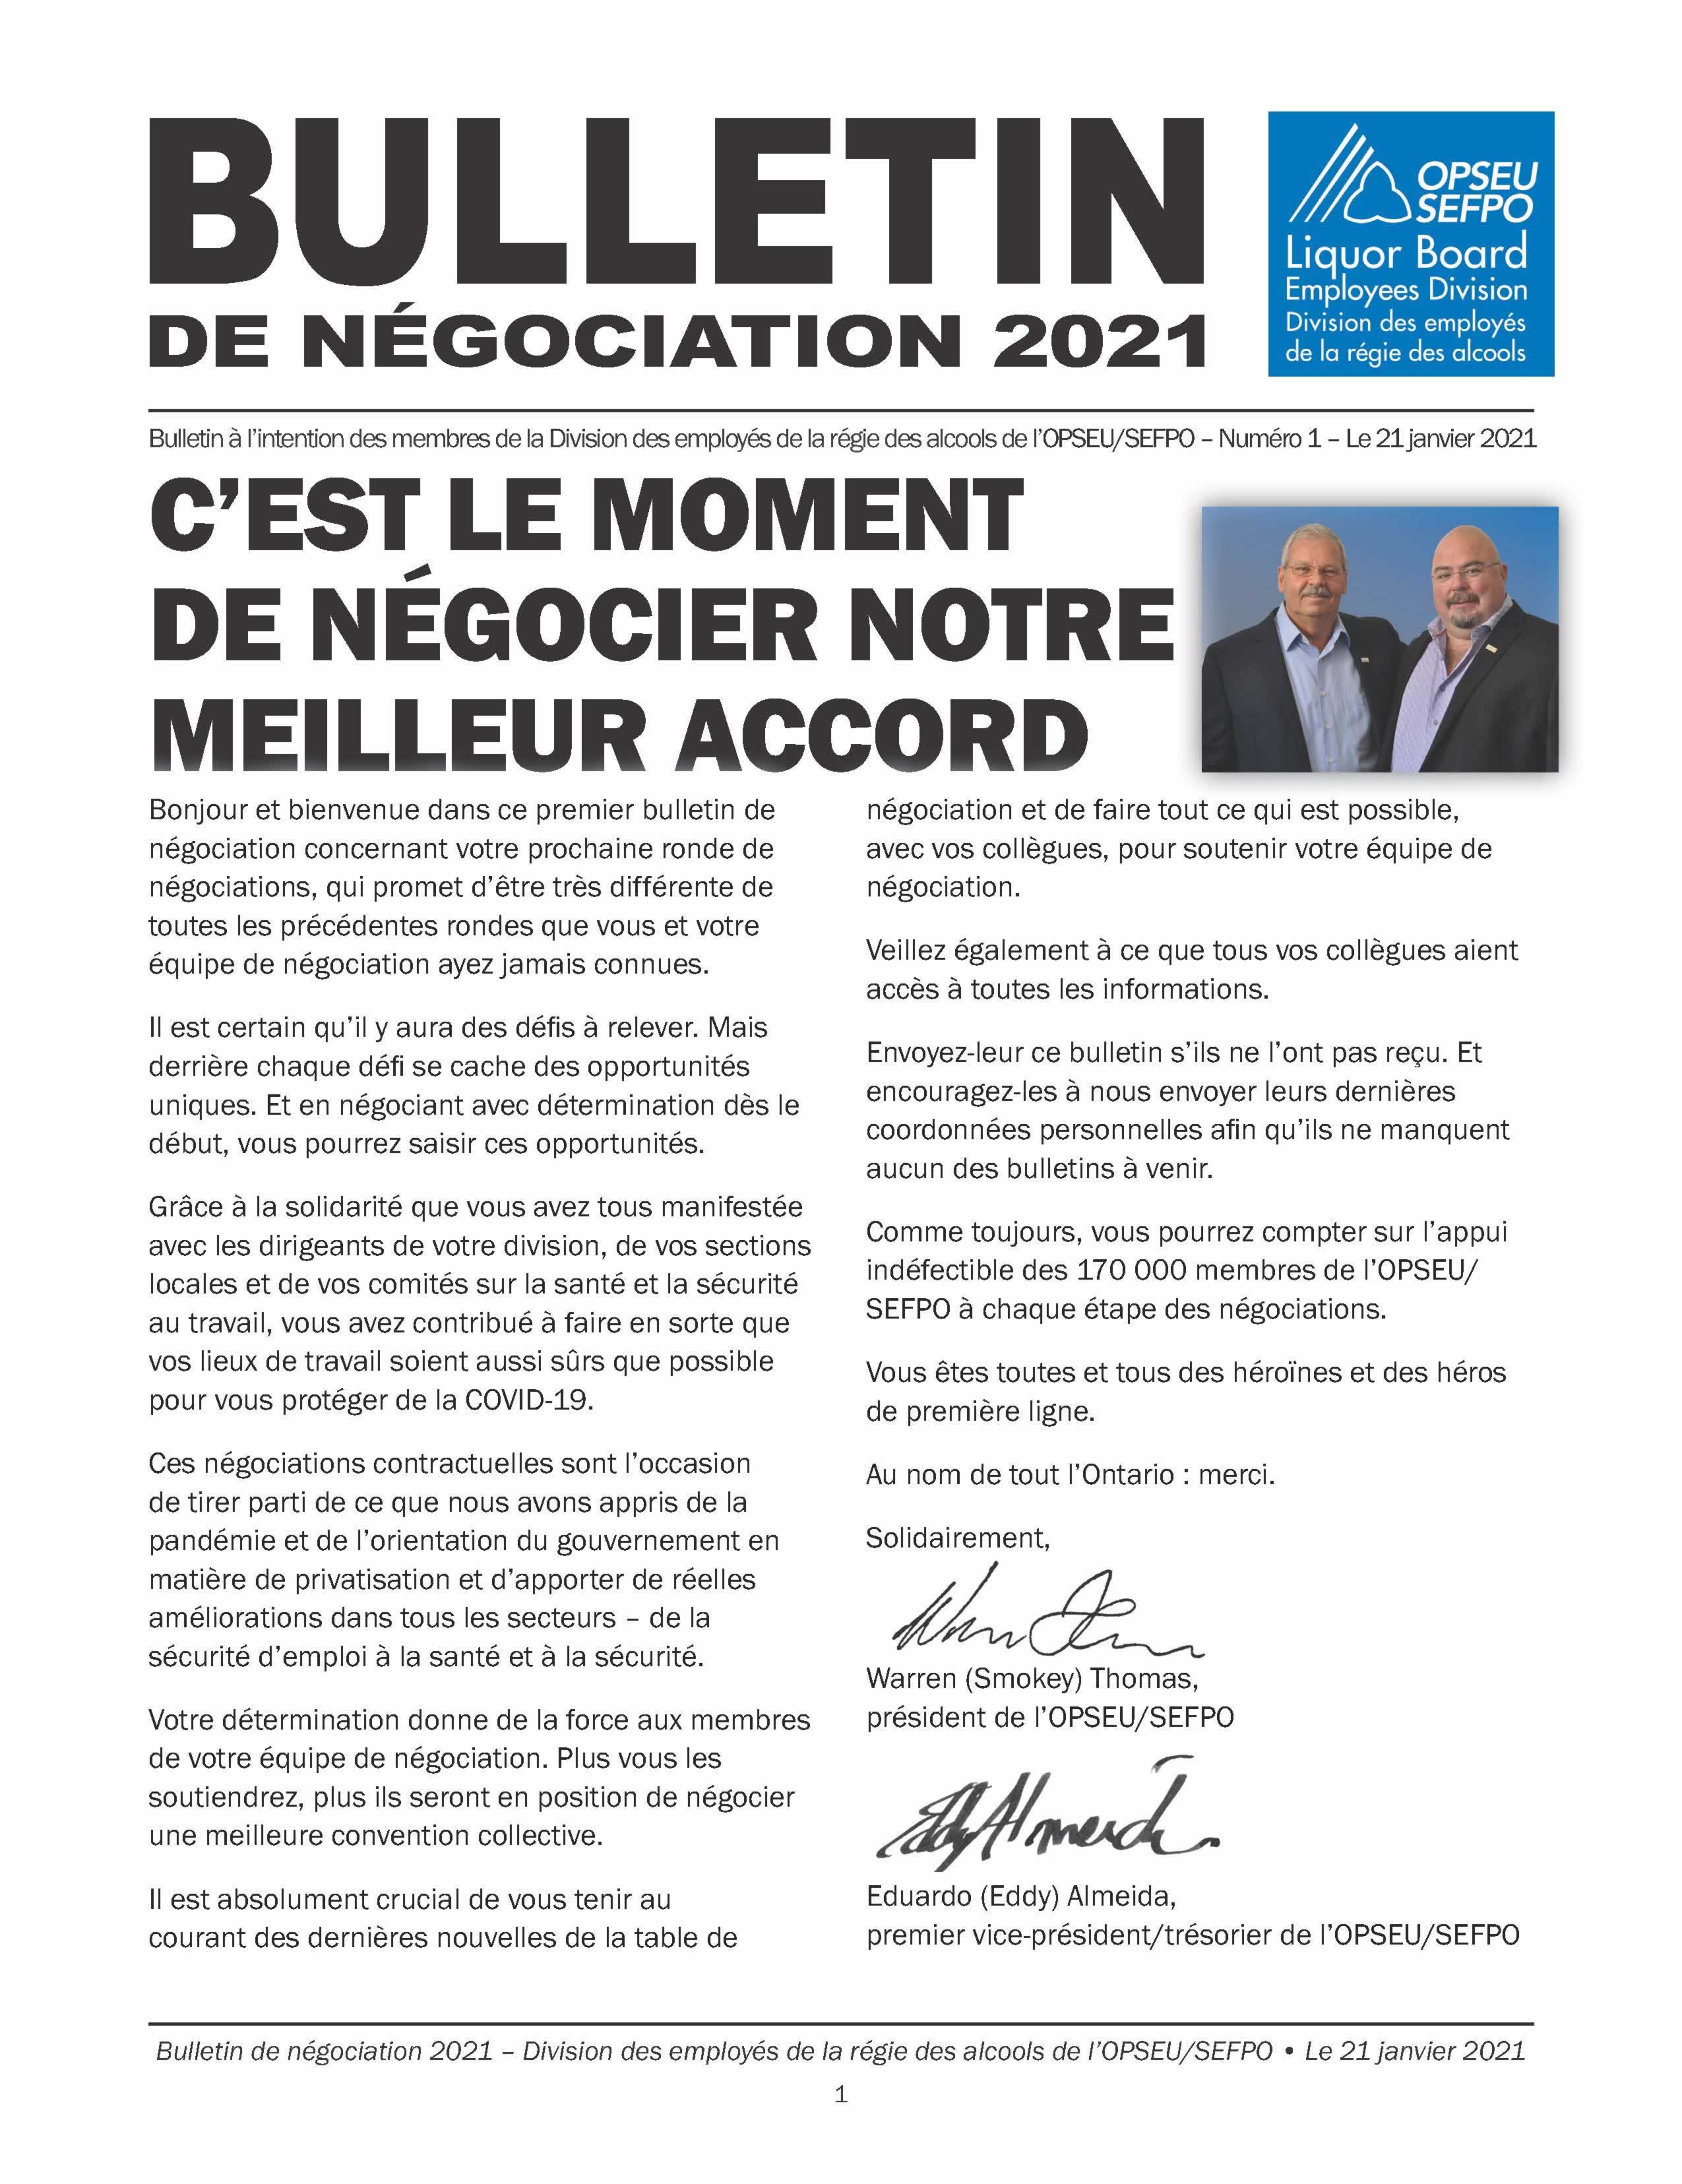 Bulletin de Negociation 2021. C'est le moment de negocier notre meilleur accord